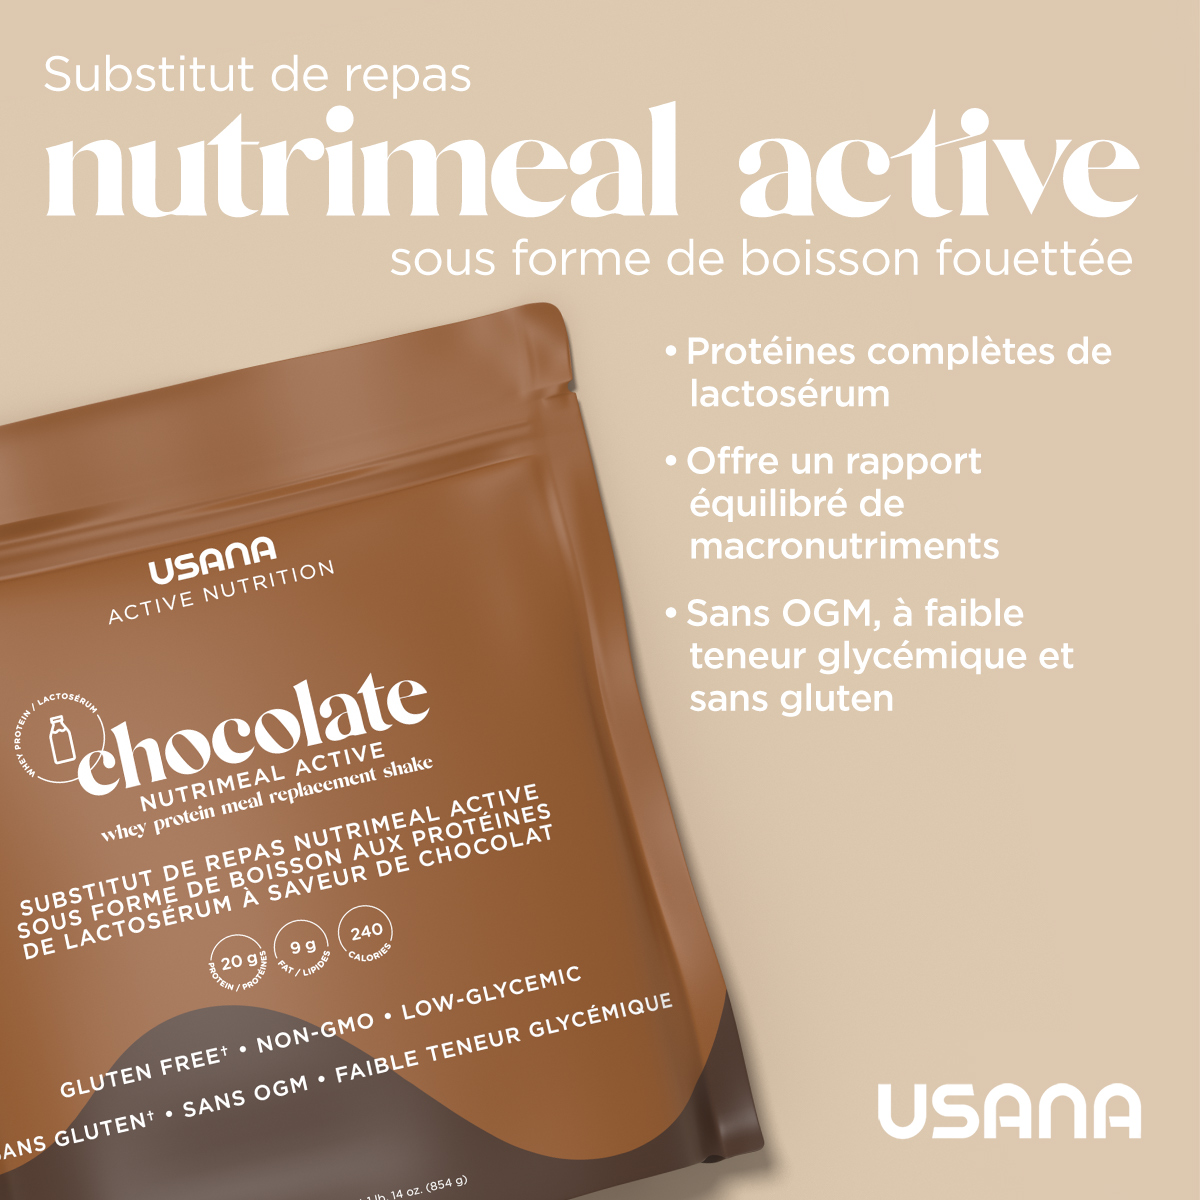 Nutrimeal active  chocaolat/ vanille et vanille végétal